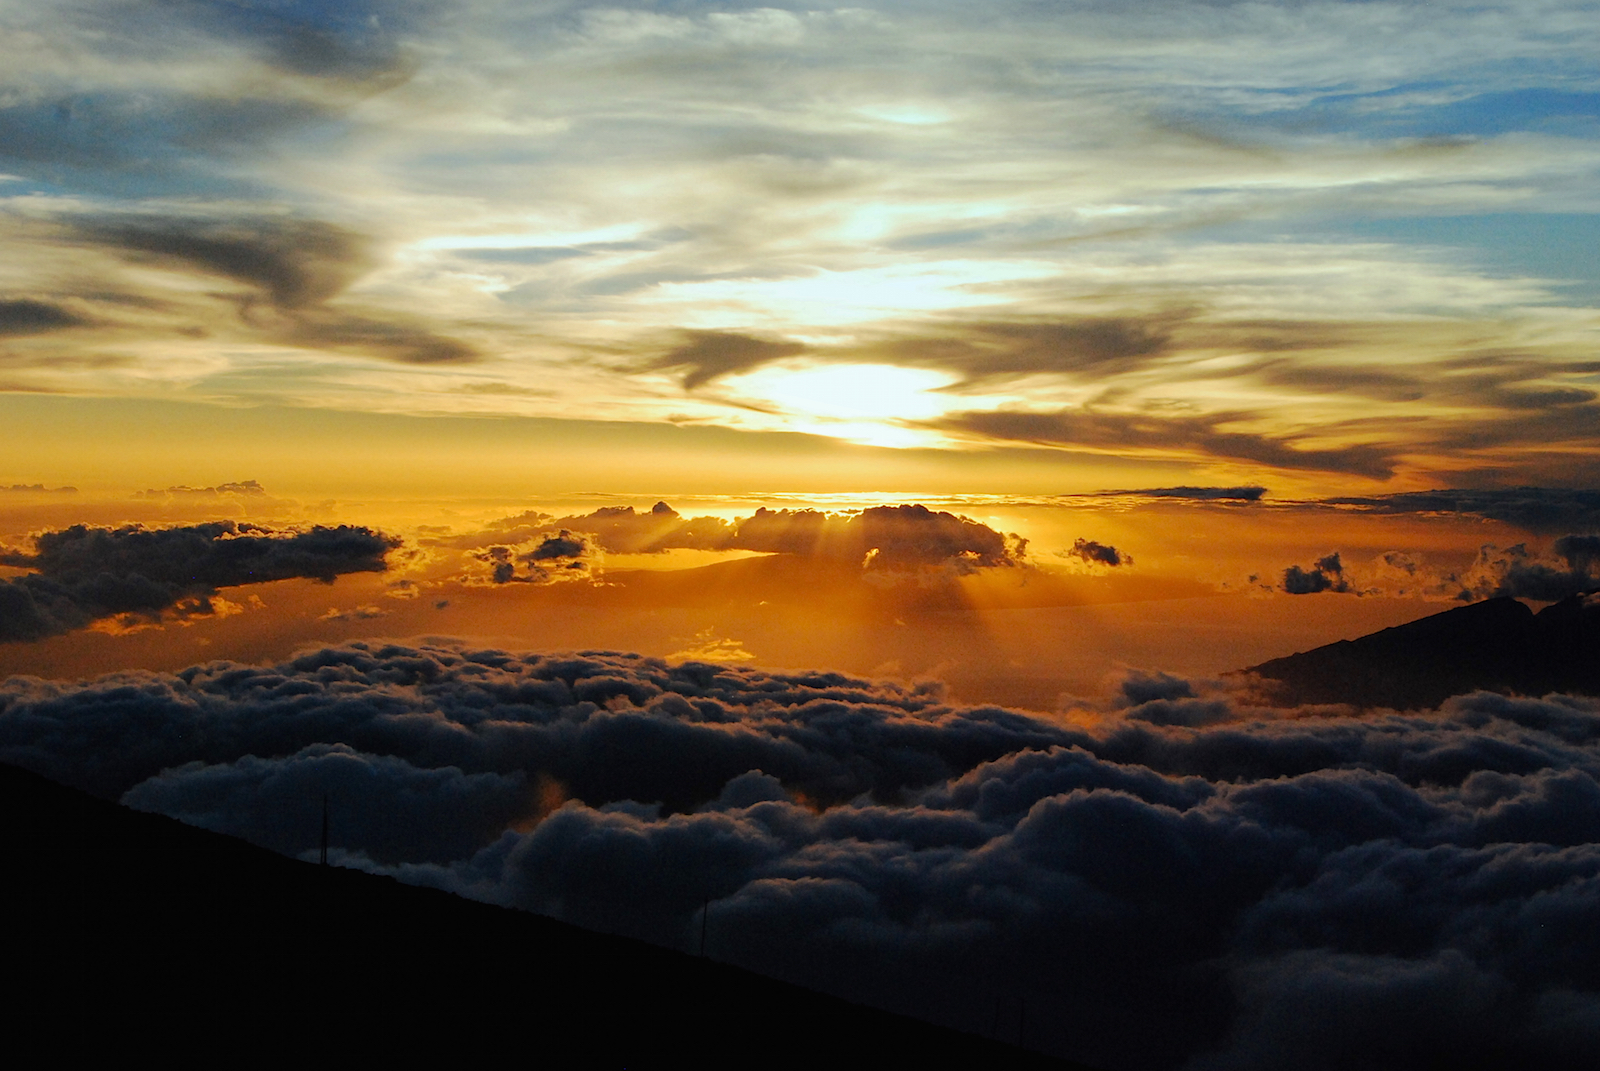 Sunset as viewed from summit of Haleakala Volcano, Maui, Hawaii